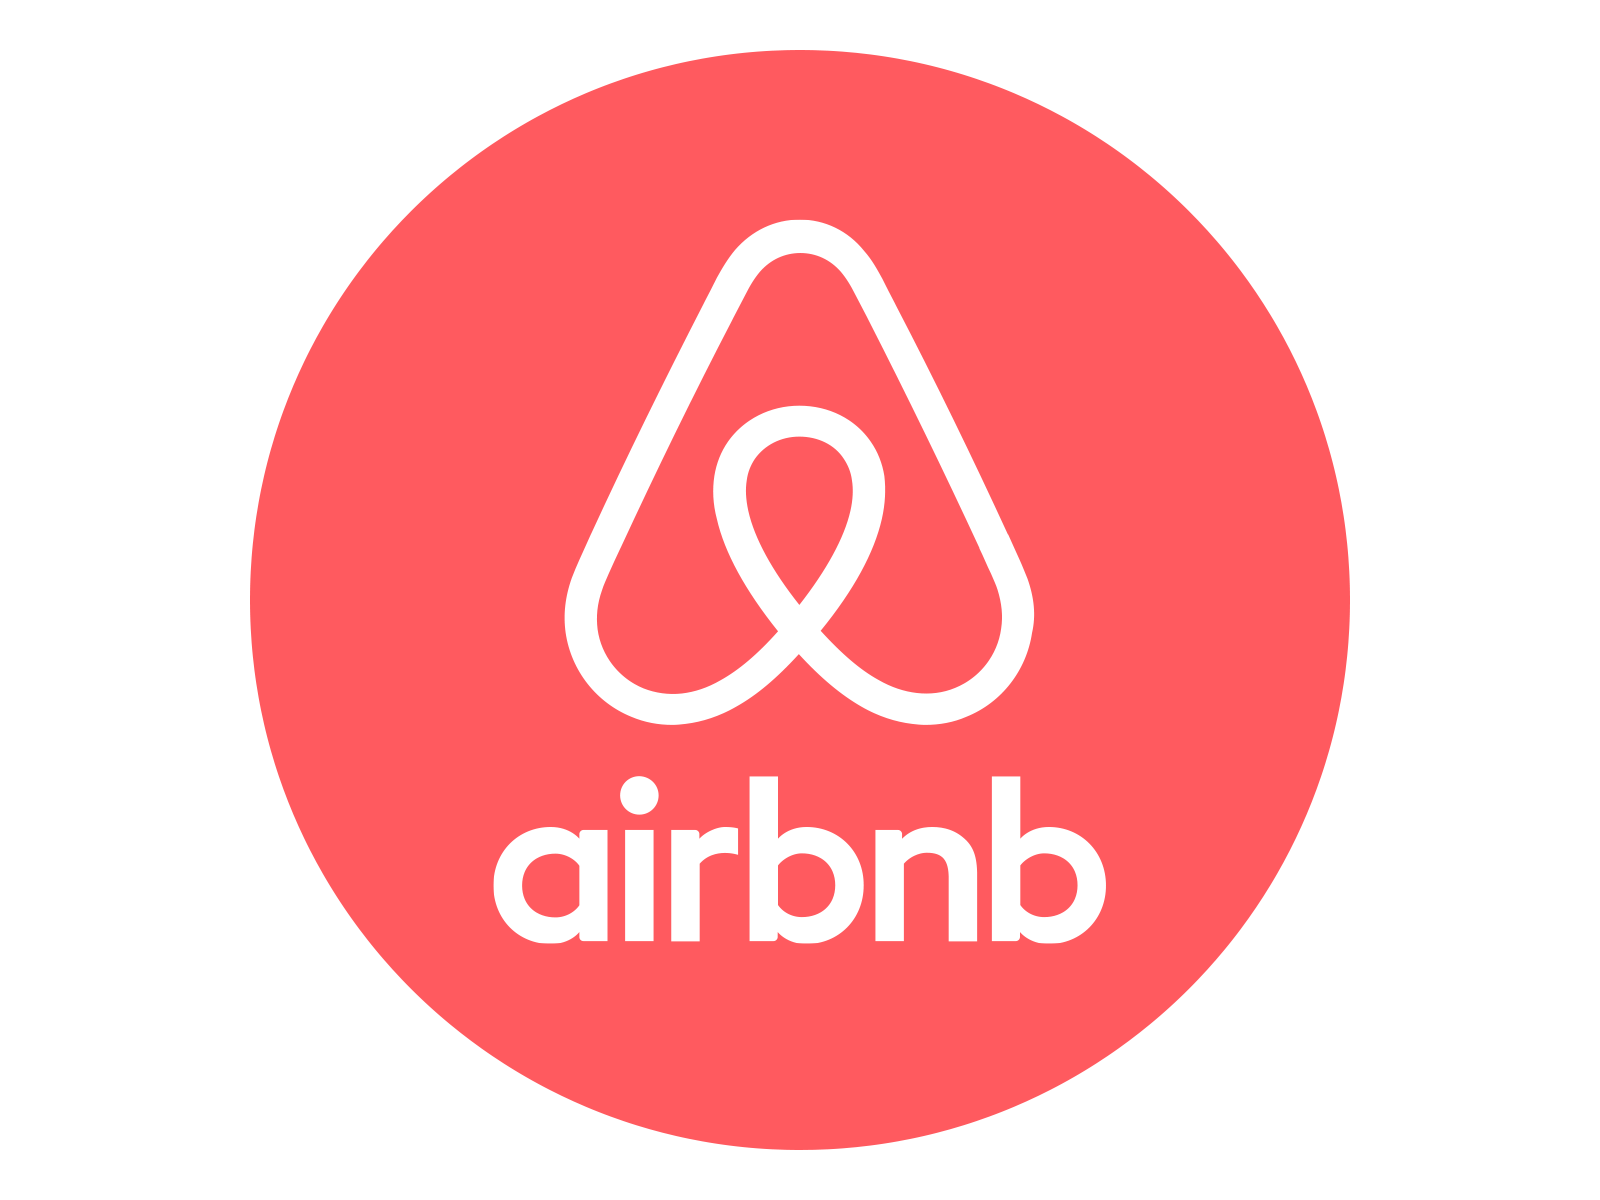 Airbnb Logo White on Black